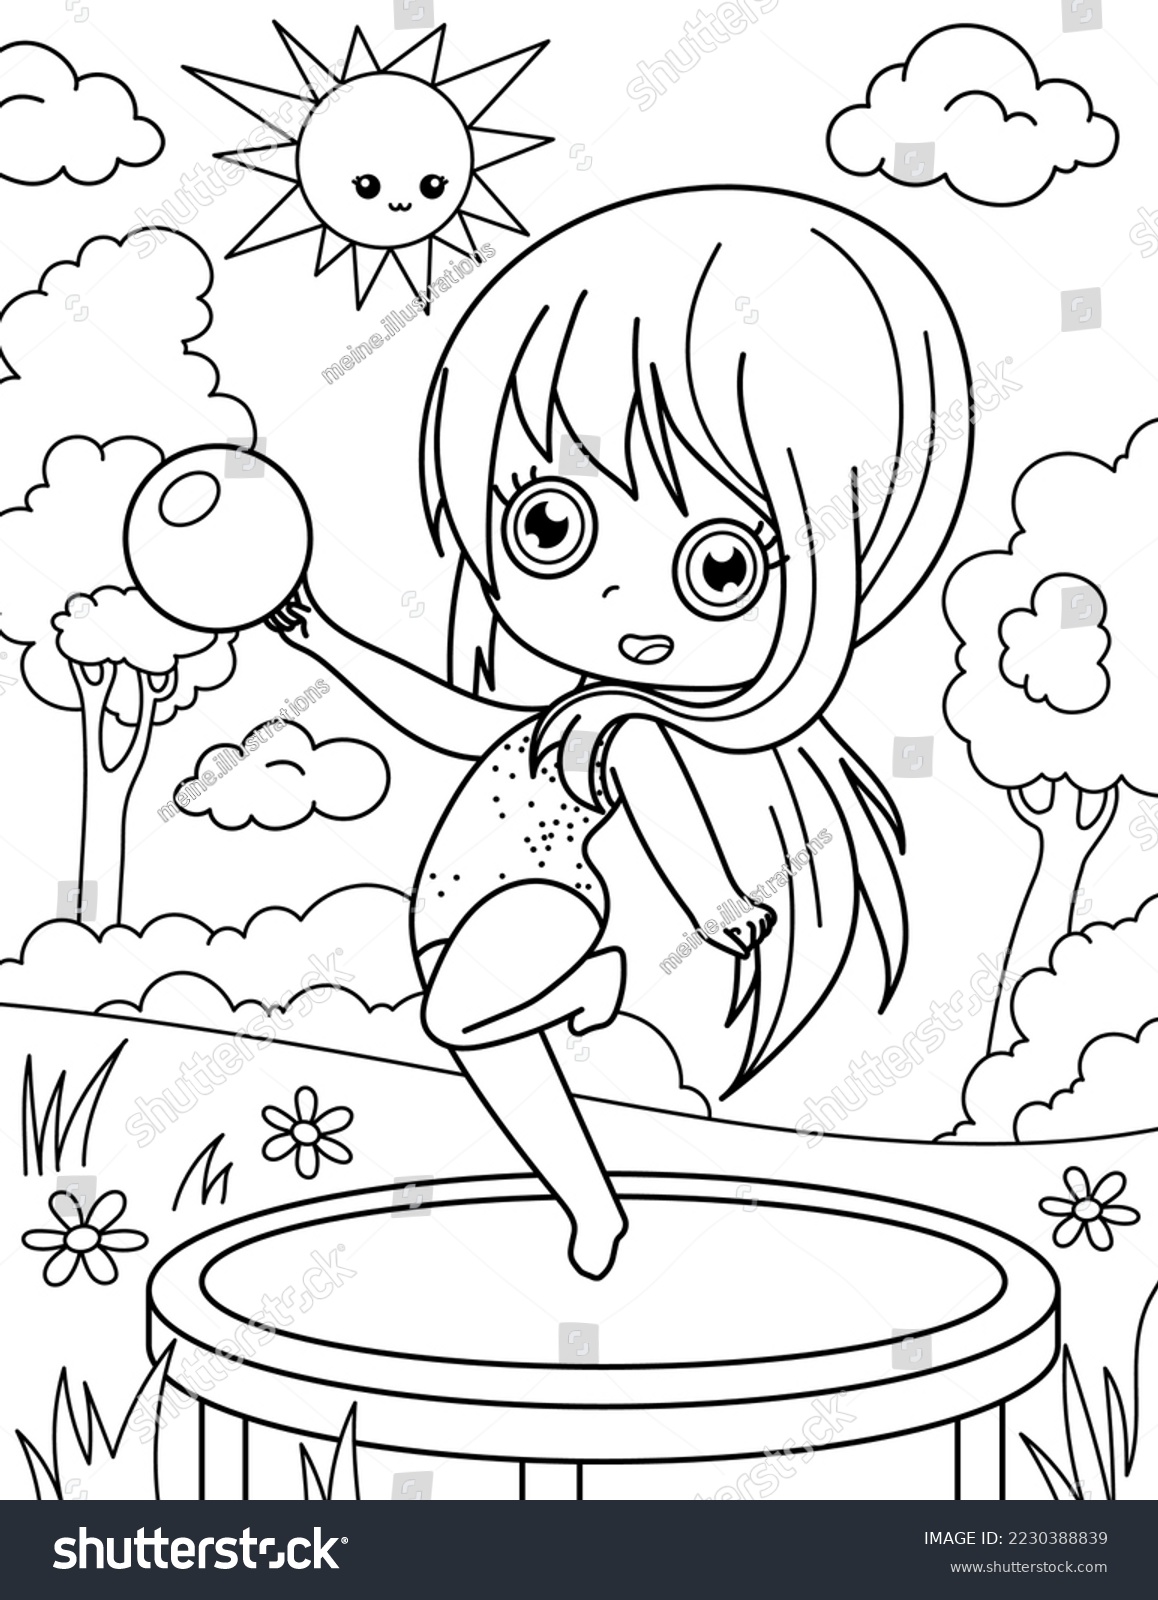 Girl ball on trampoline coloring book arkivvektor royaltyfri